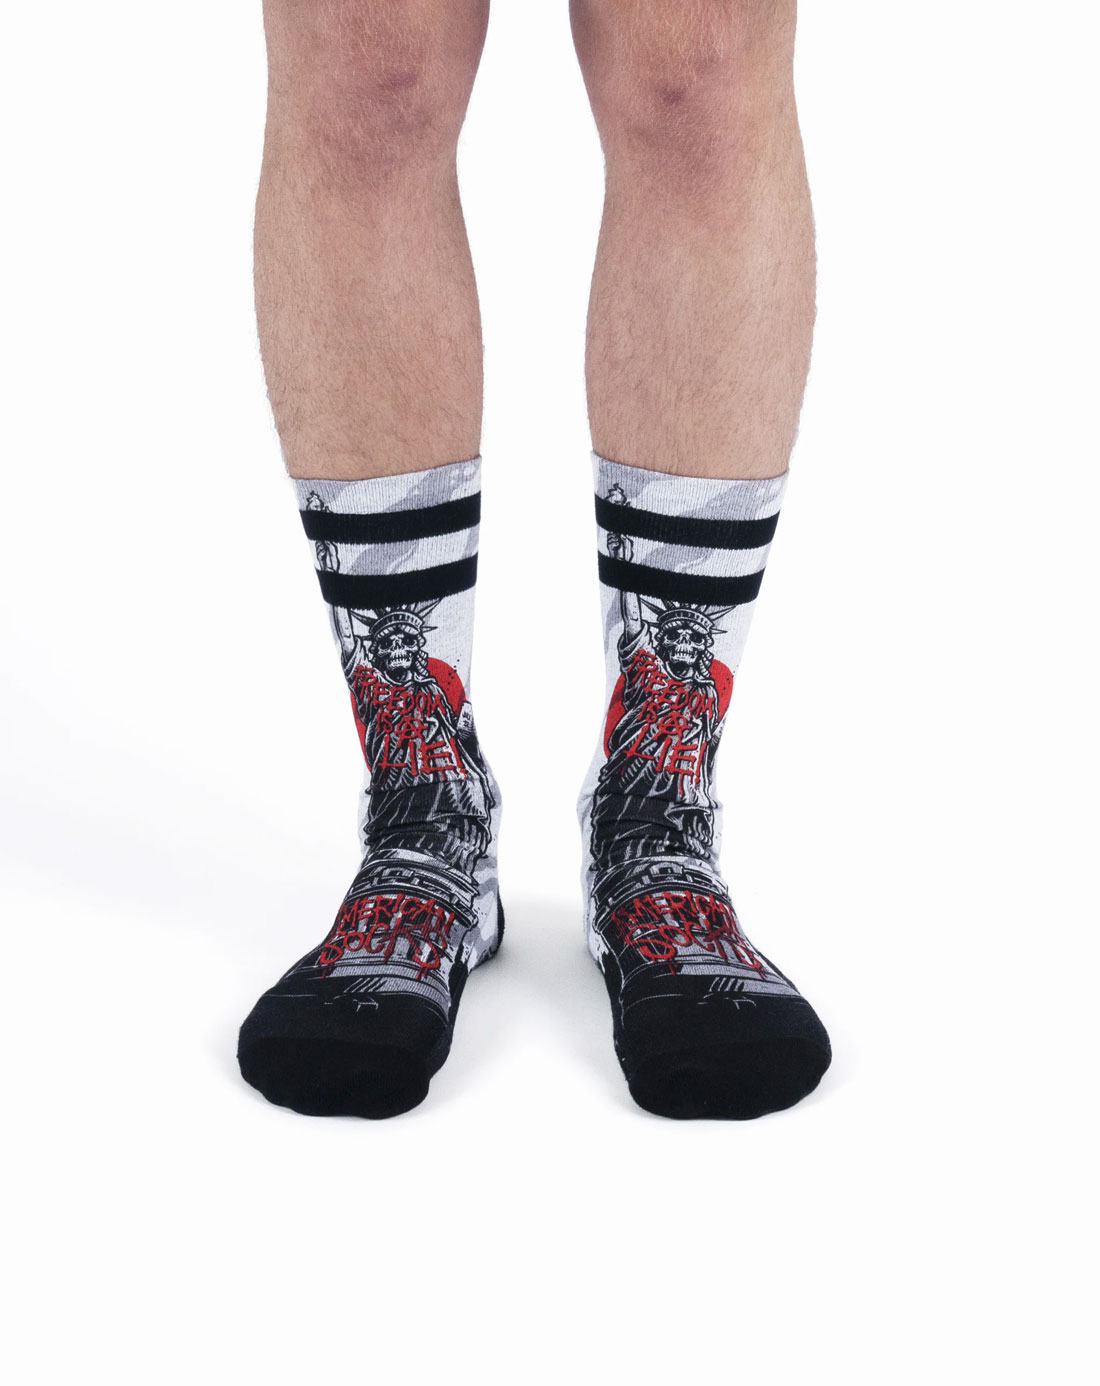 Calcetines Skate American Socks Born Dead Unisex